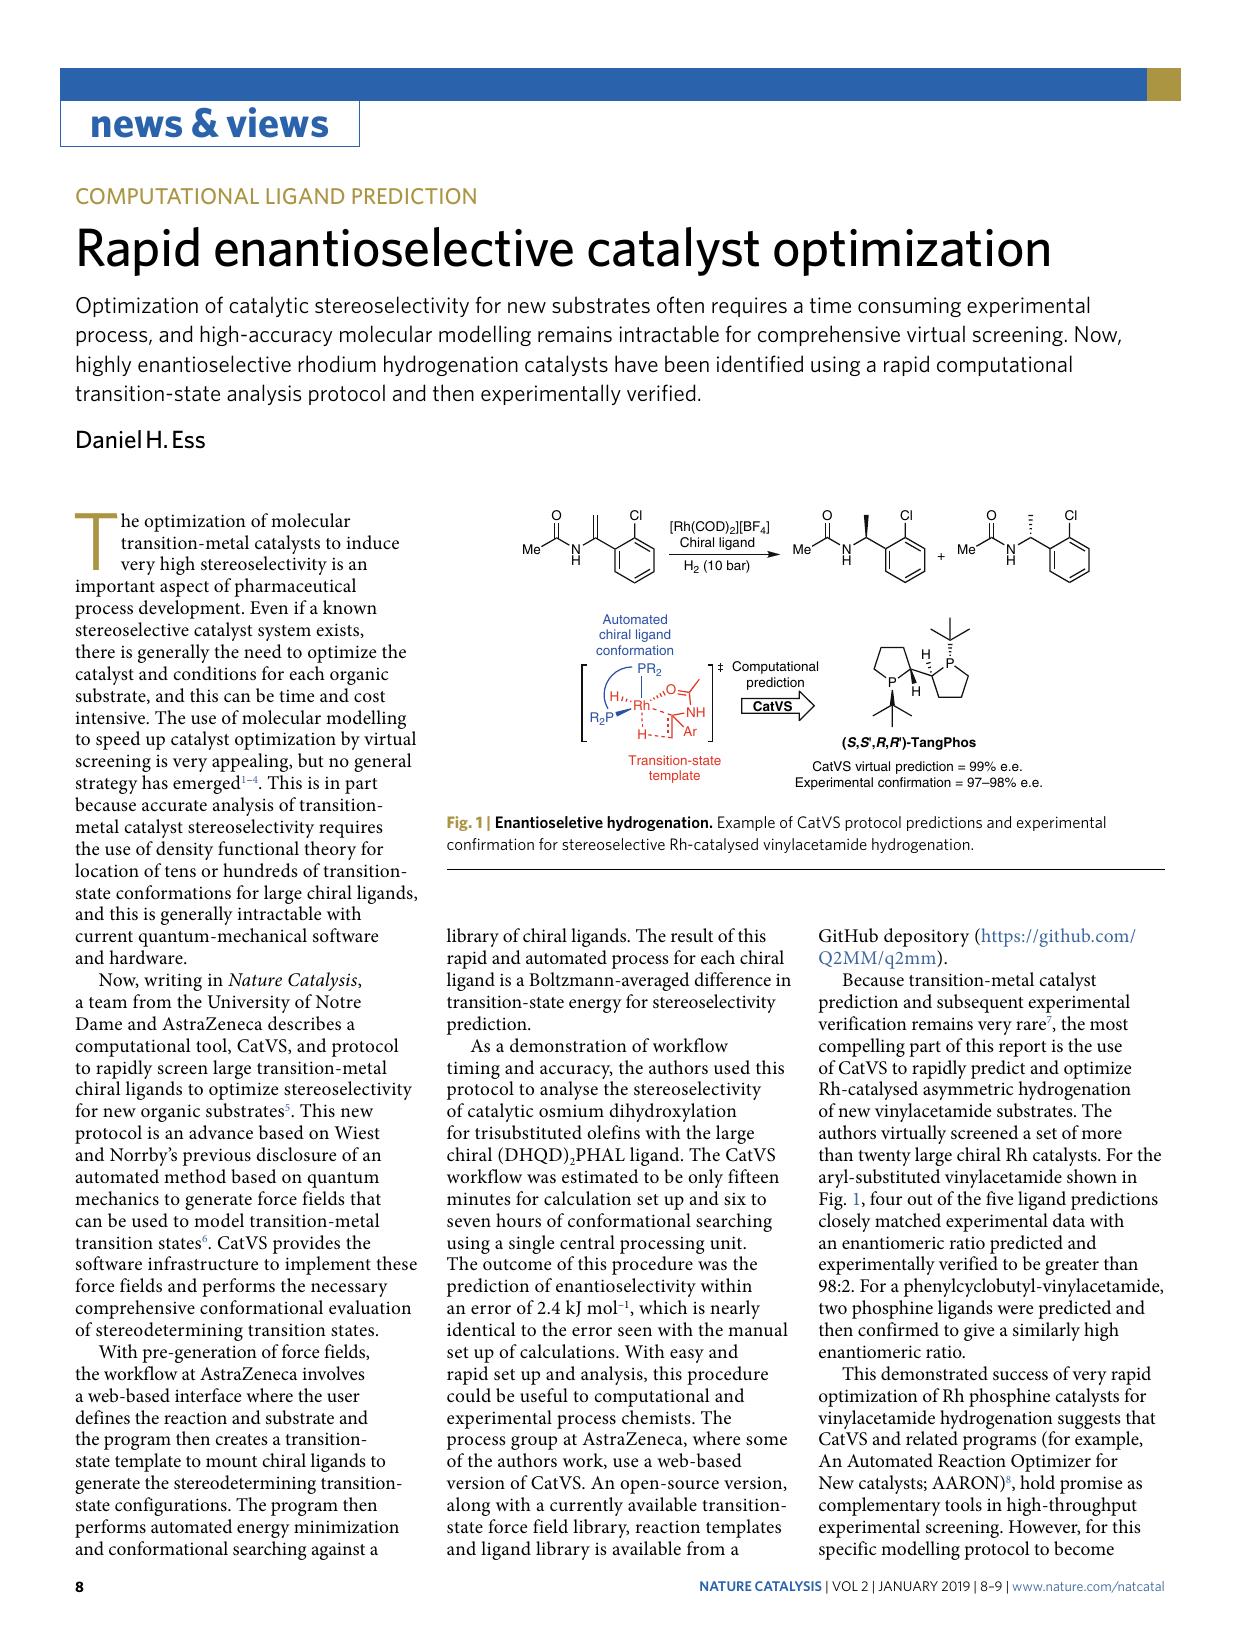 Rapid enantioselective catalyst optimization by Daniel H. Ess